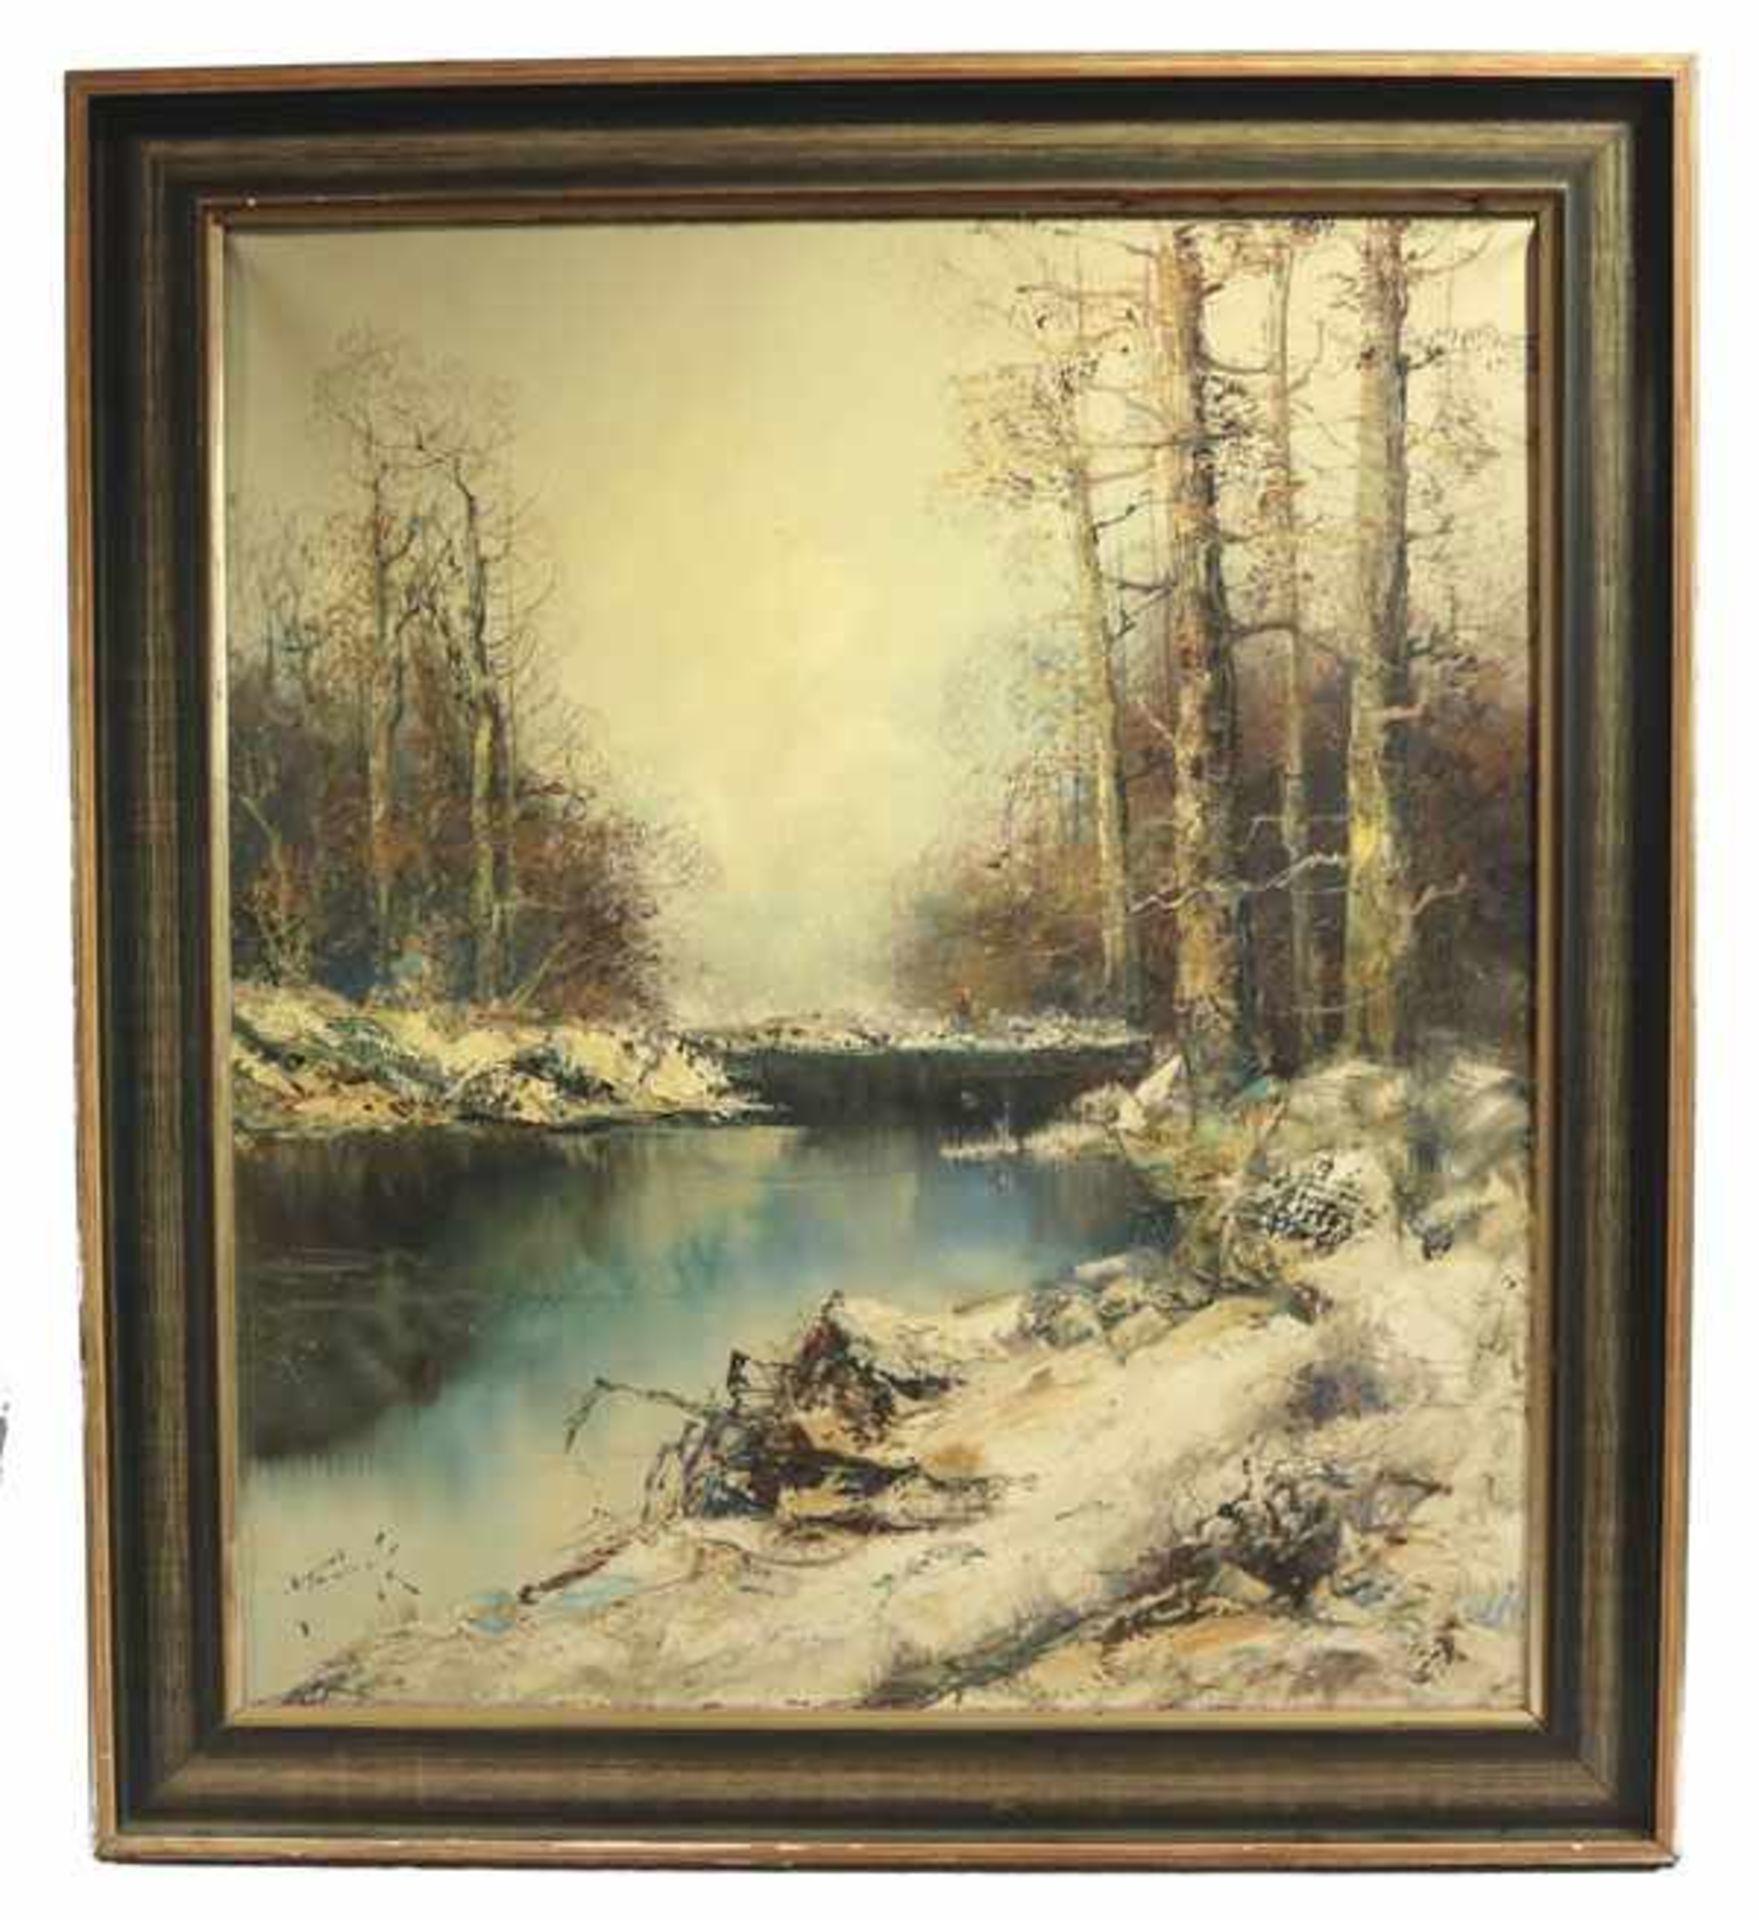 Gemälde ÖL/LW 'Moorlandschaft im Winter', signiert Türk, Gustav, * 1923 Sessen/Harz + 1978 Klais, in